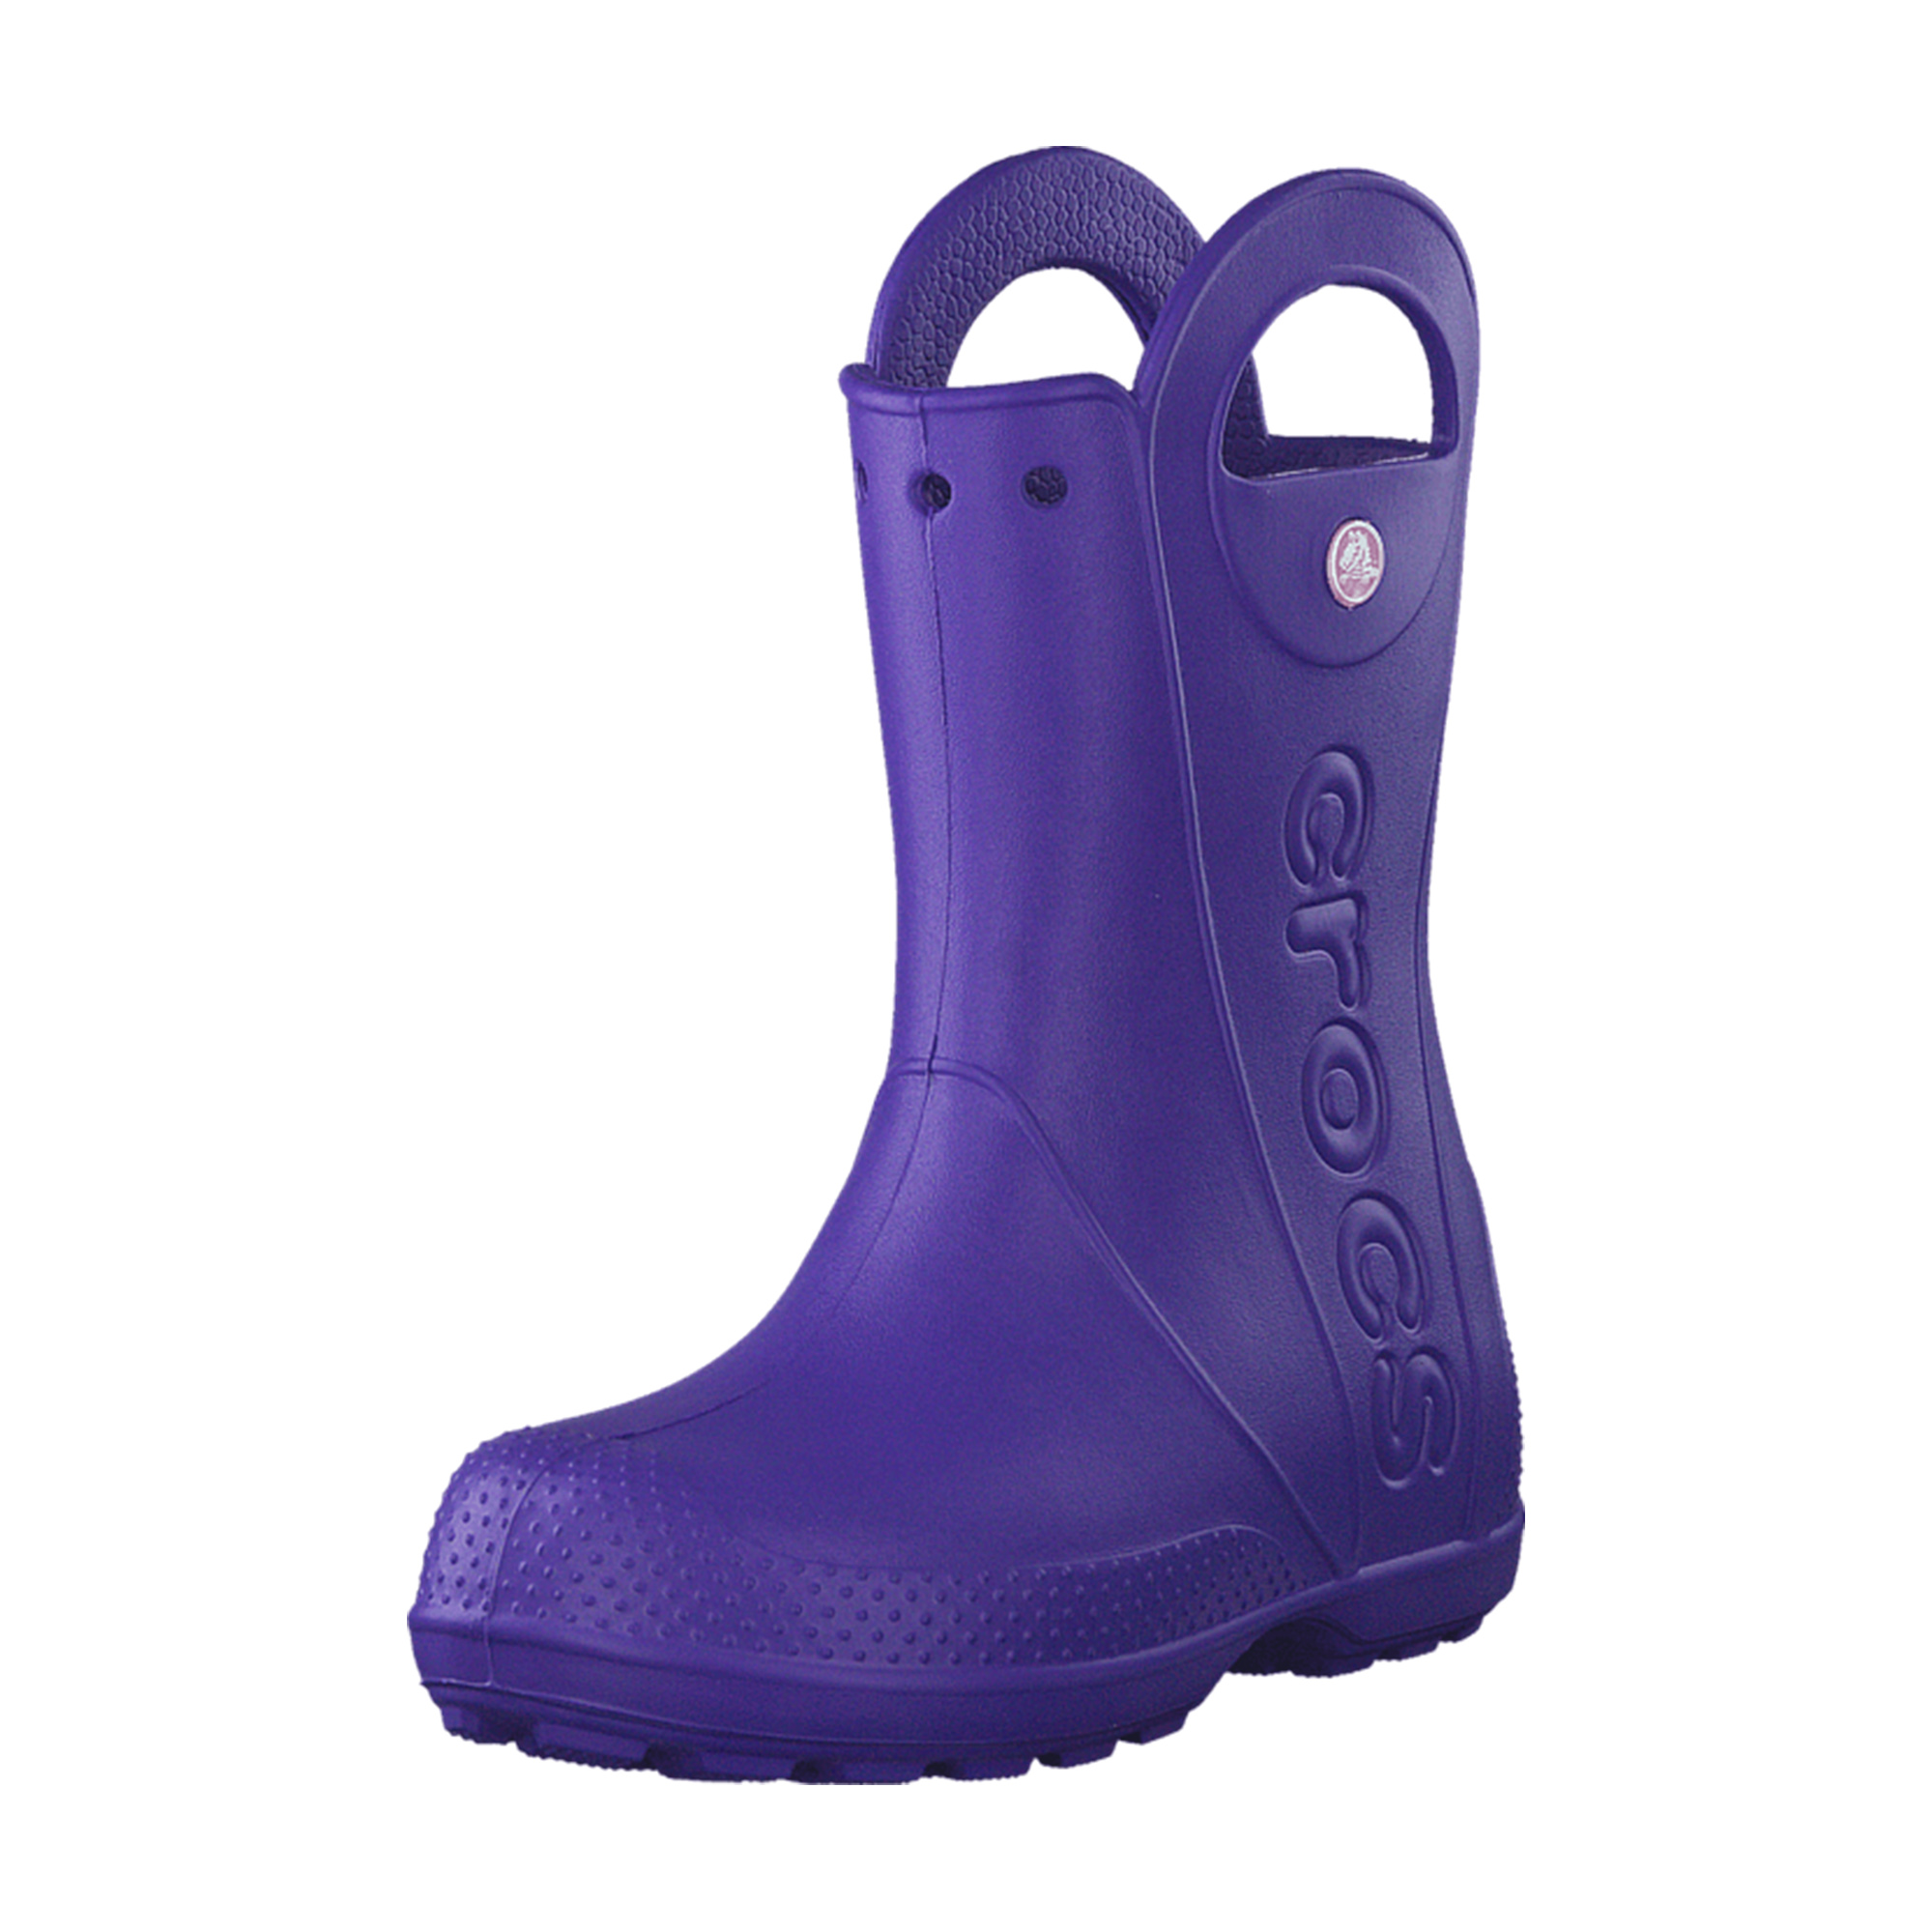 Sample Product Rain Shoes